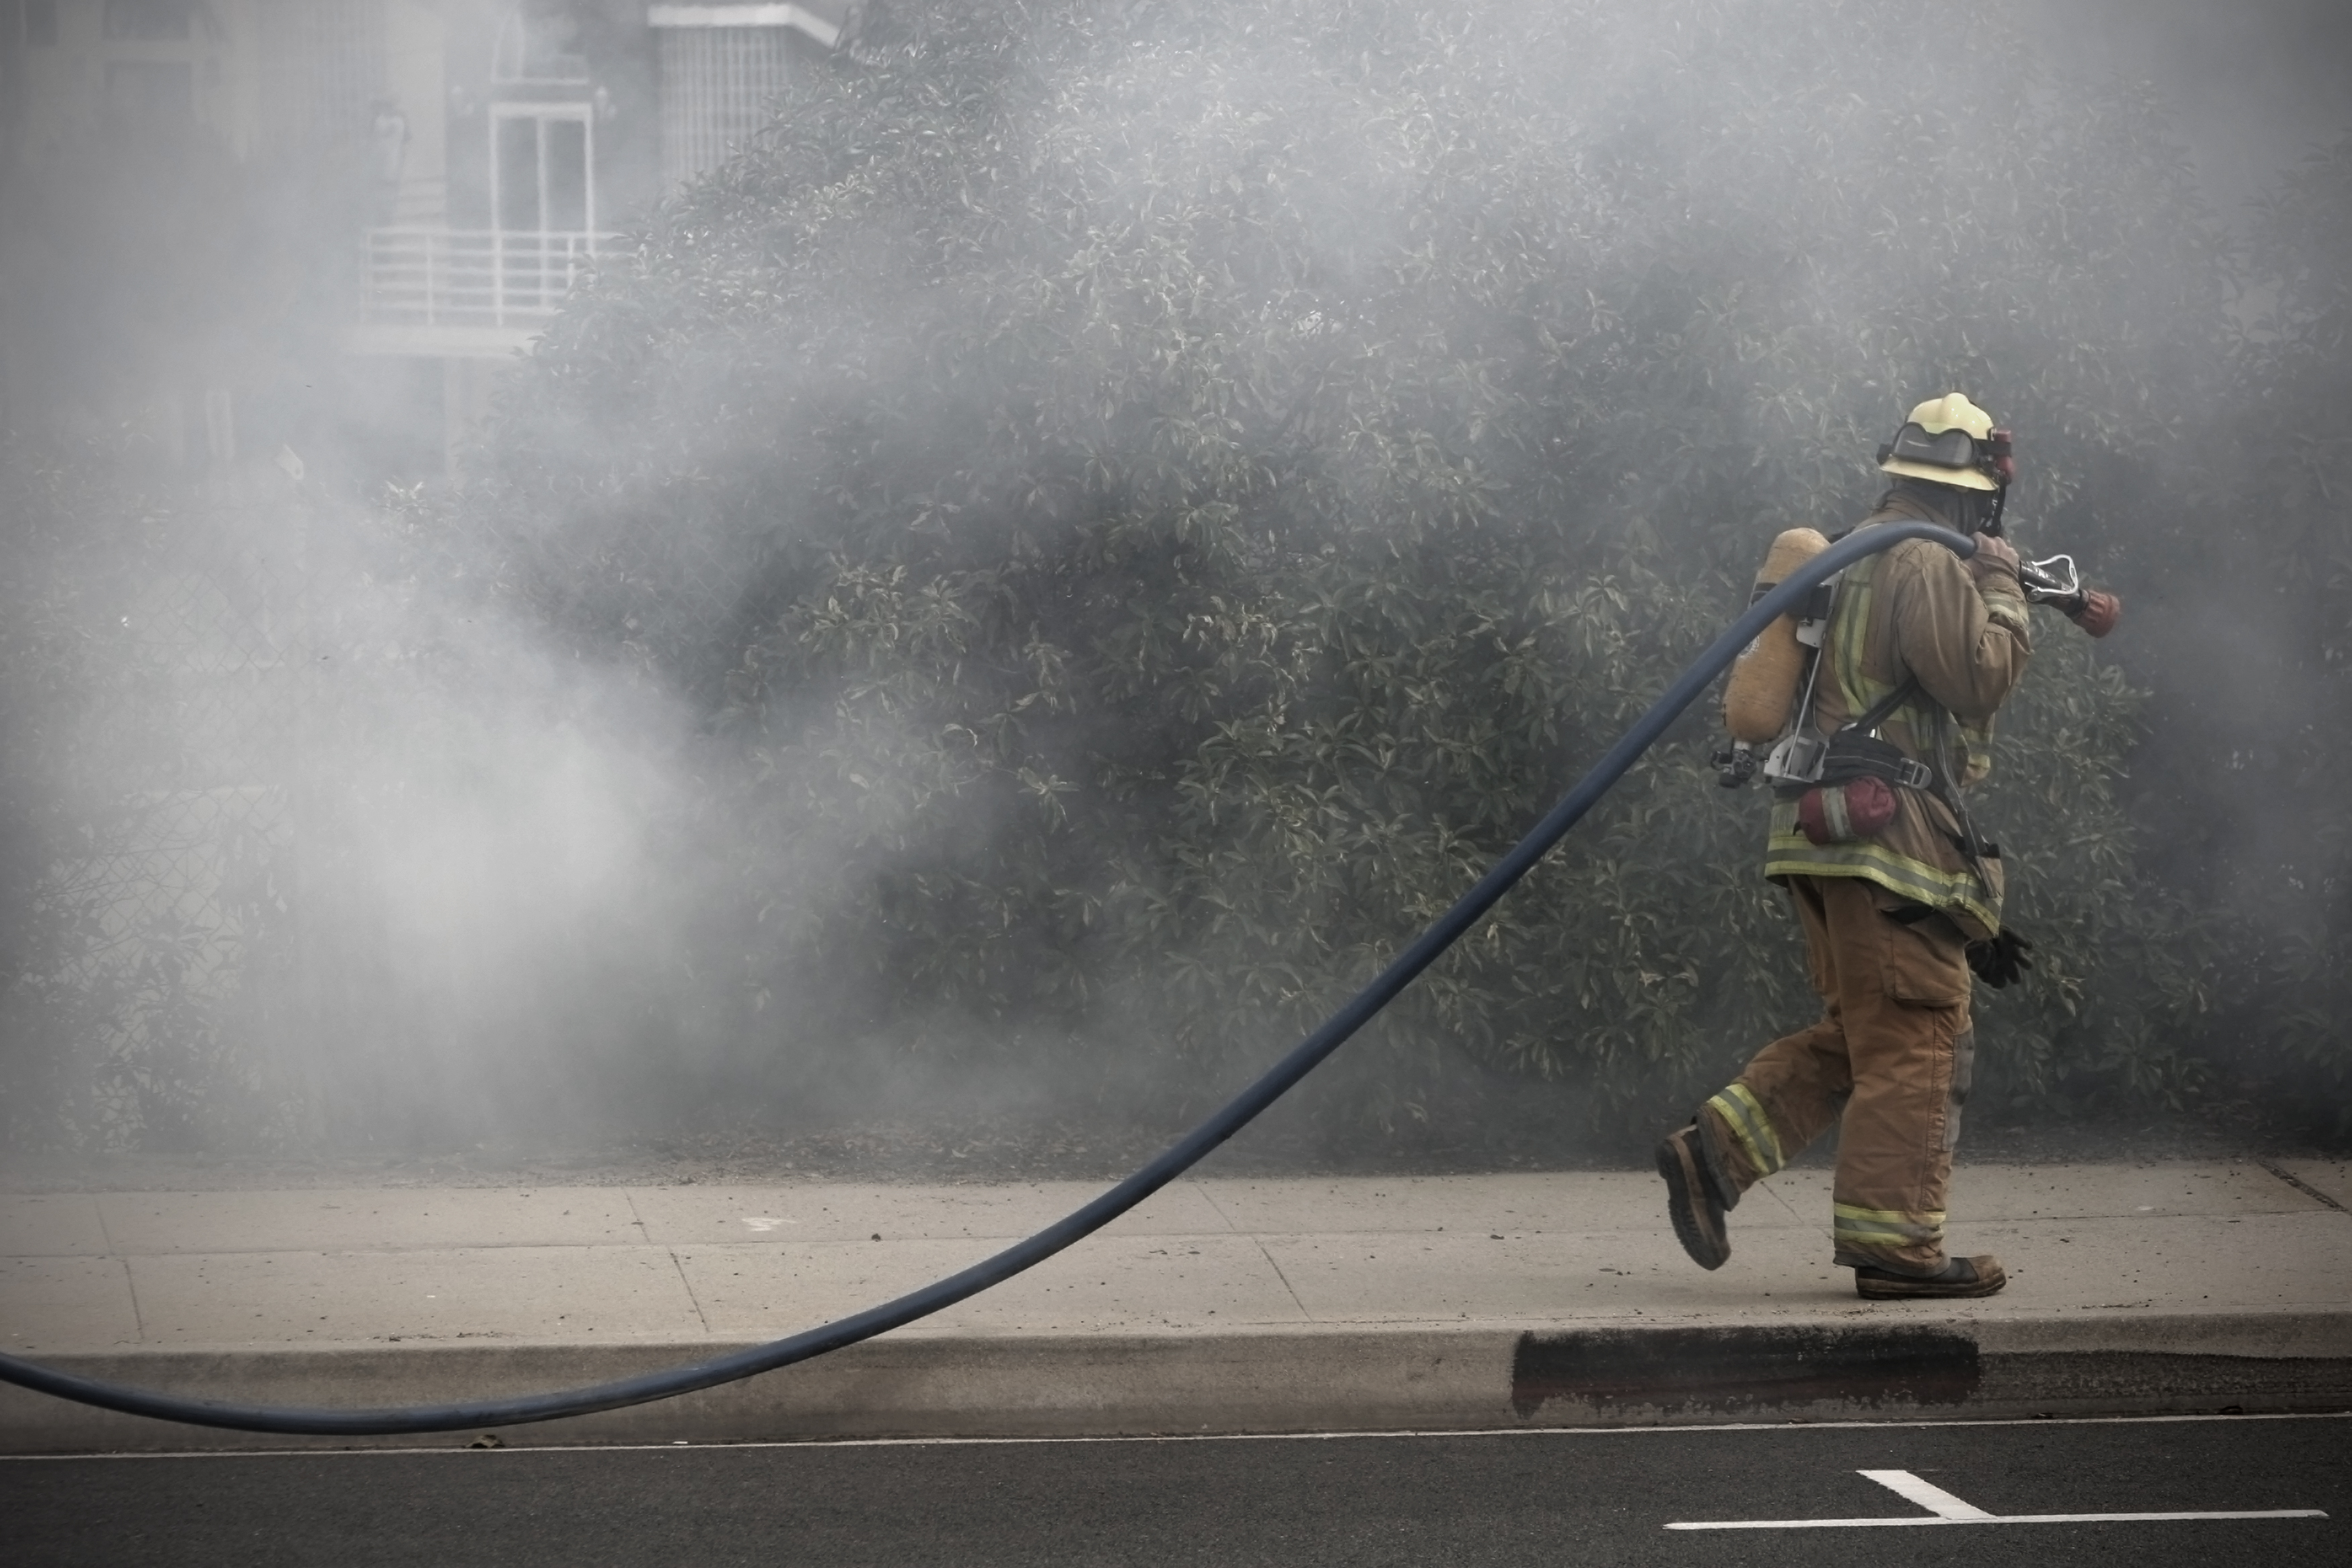 A firefighter walks with a hose near a sidewalk next to a smoky building.